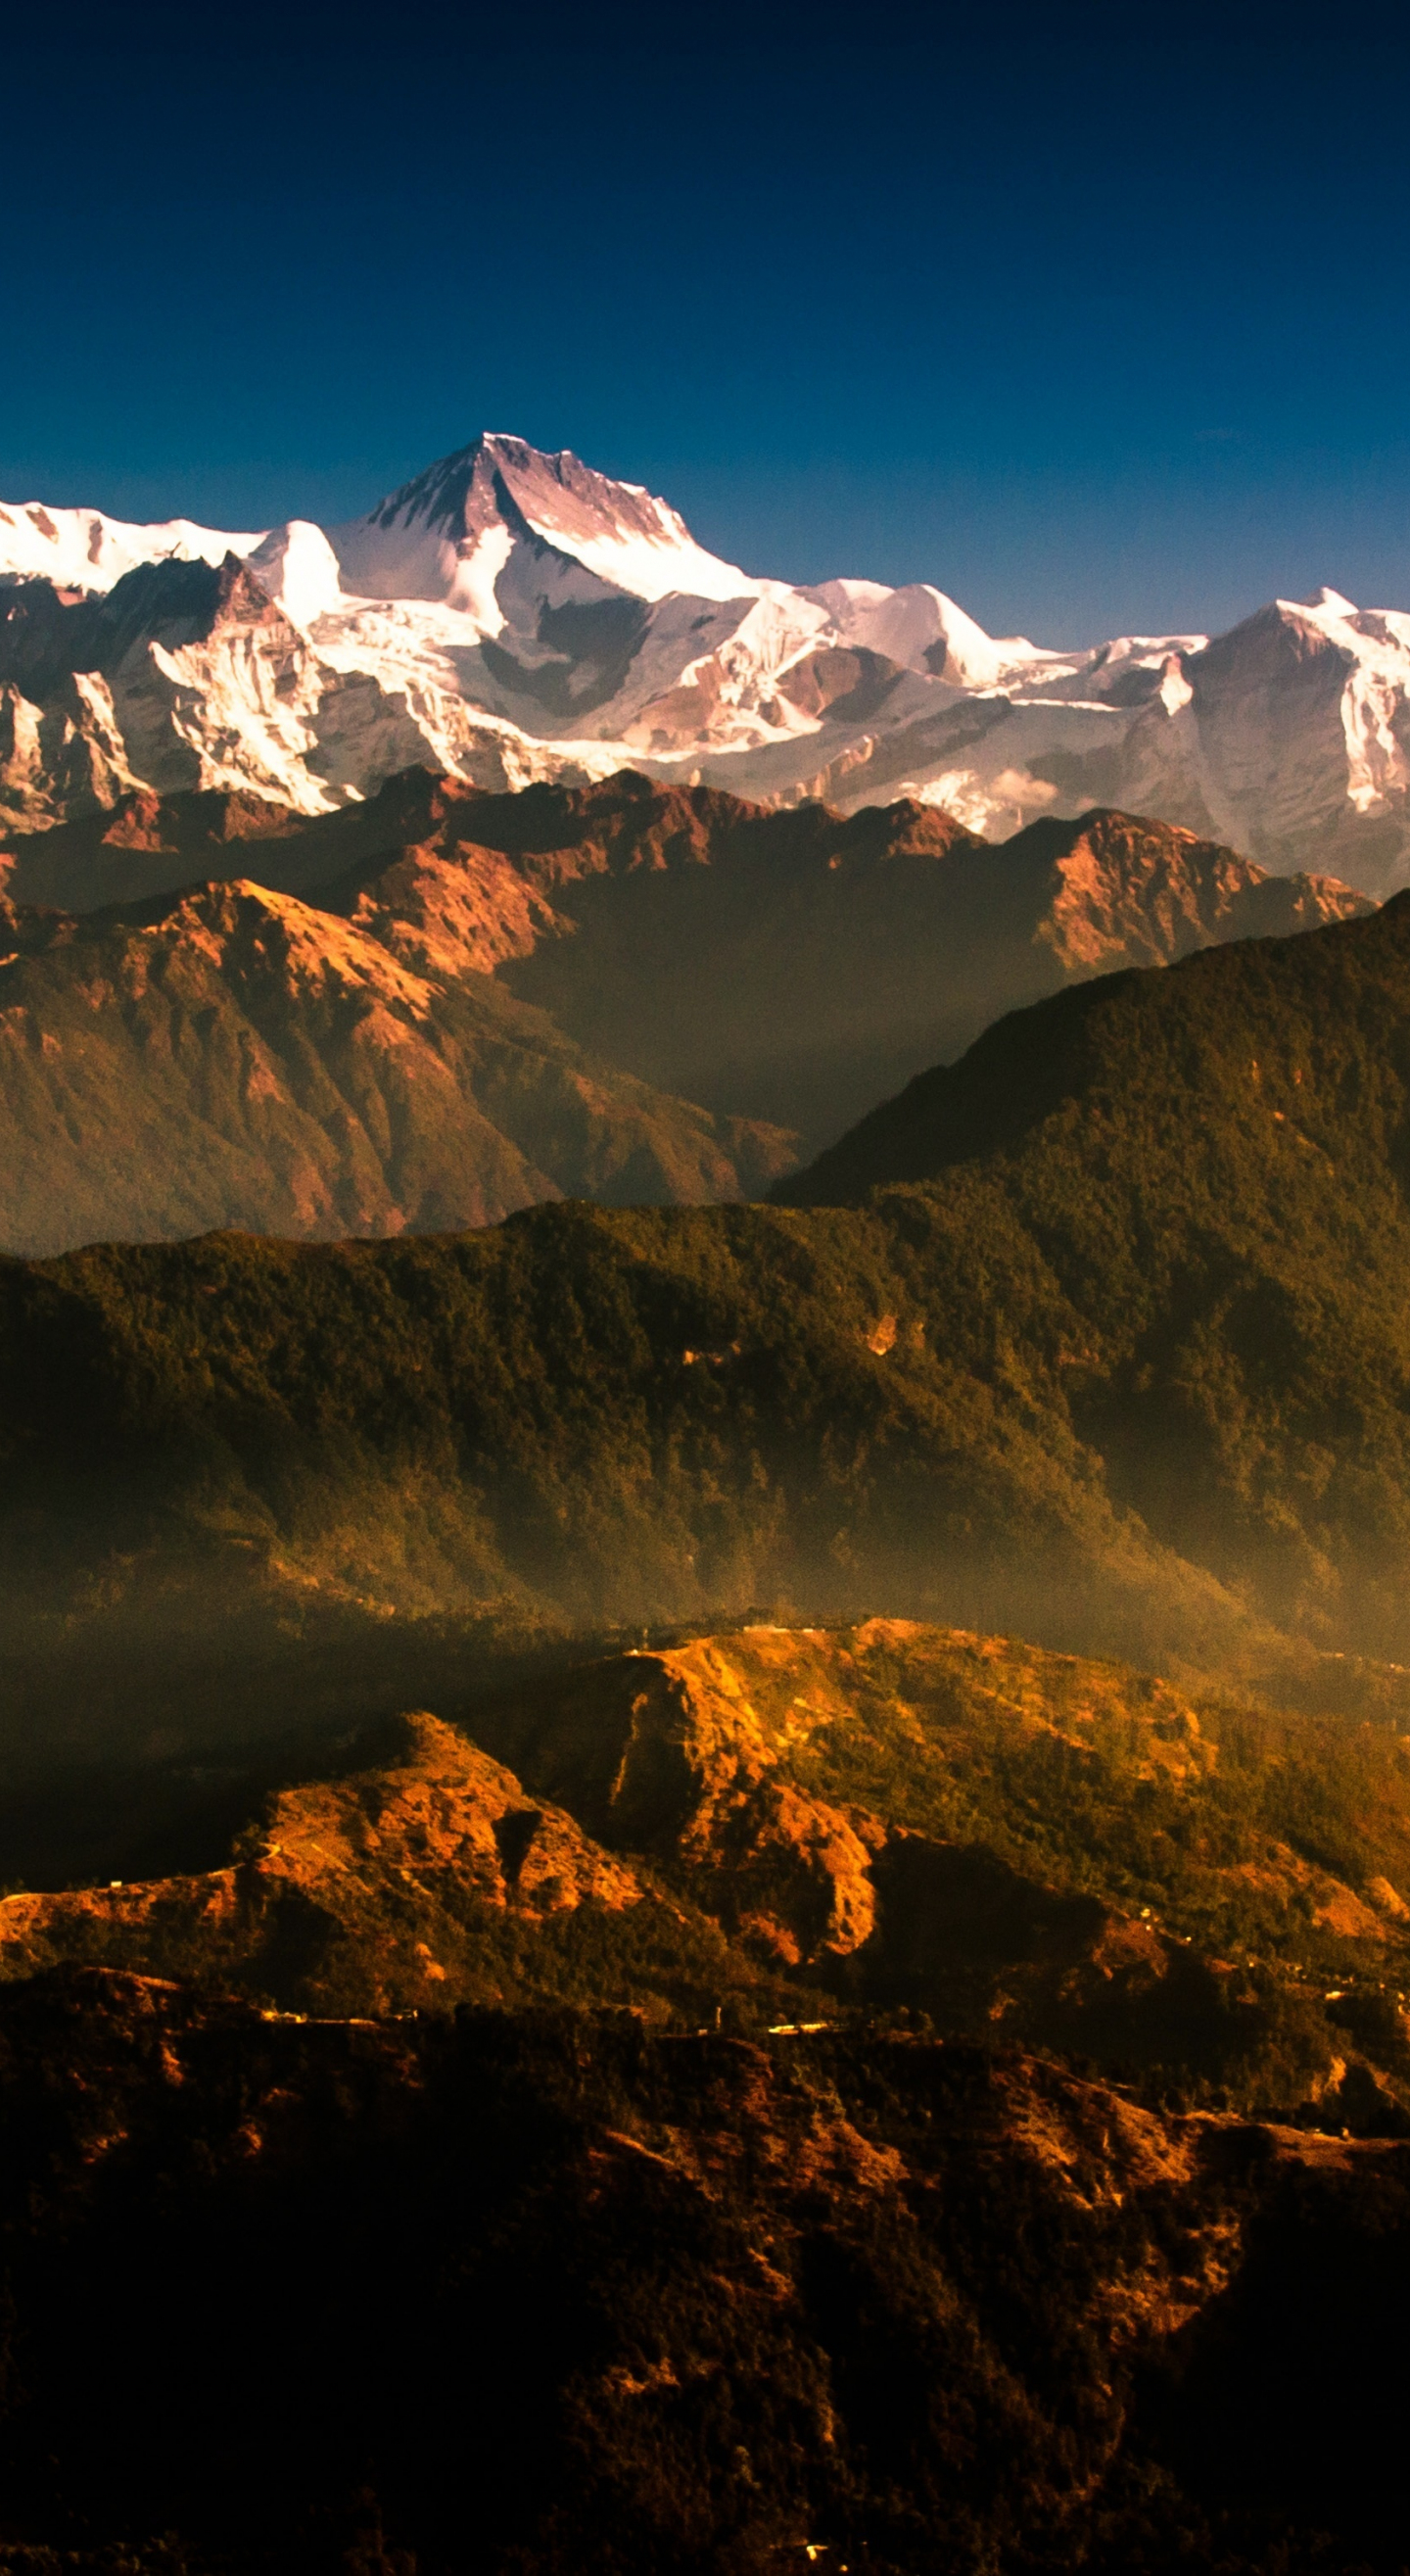 1440x2630 Download mountain, nepal, himalaya, mountains range wallpaper, samsung galaxy note 8, hd image, background, 16563